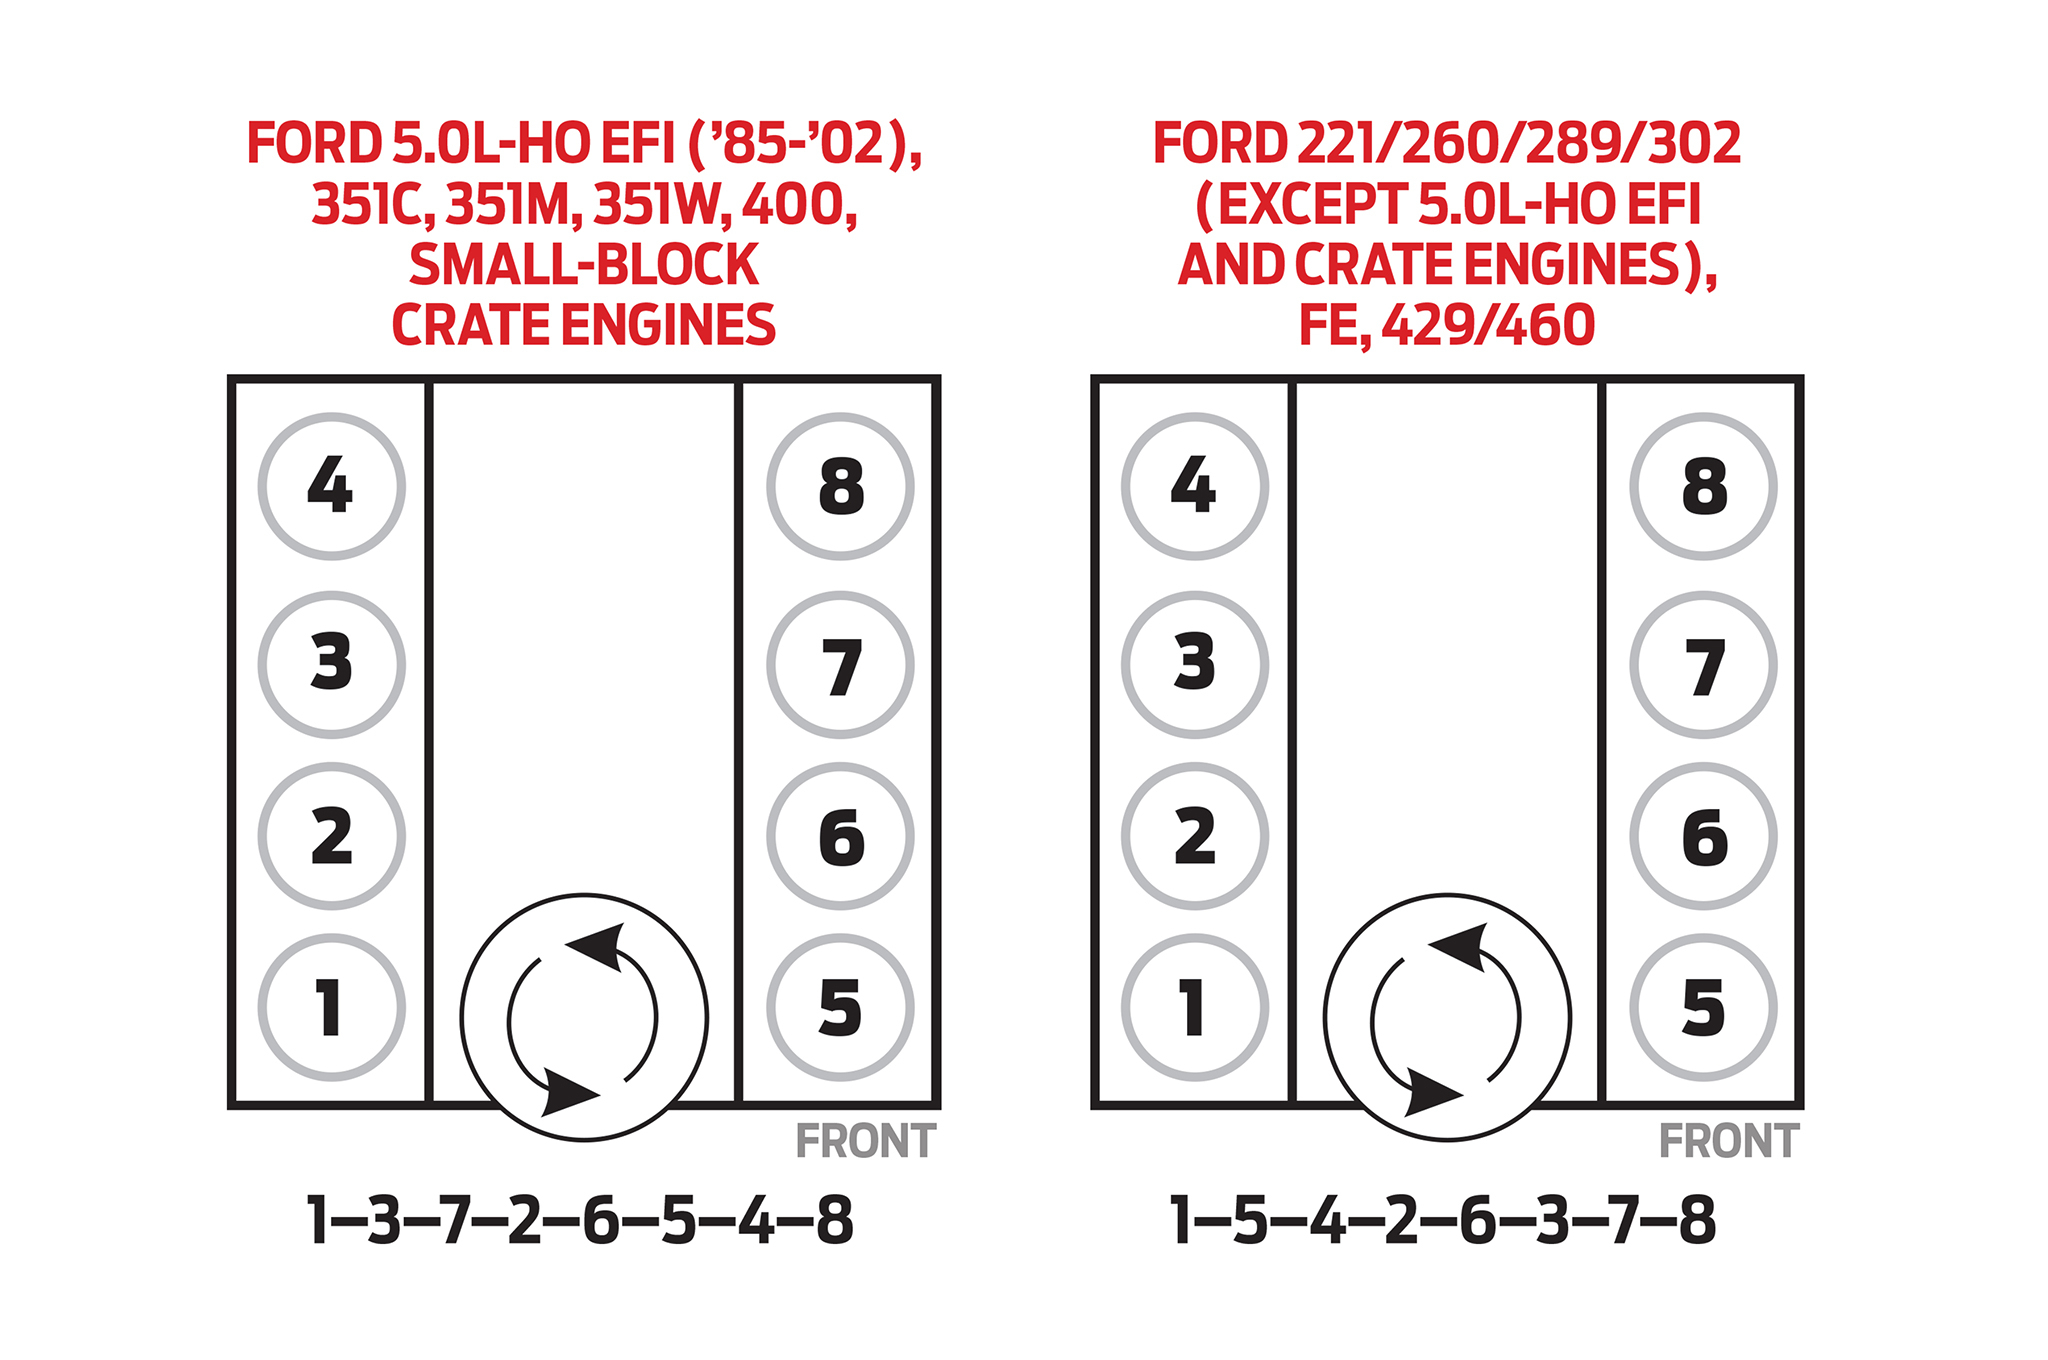 Firing Order On Ford 5.4